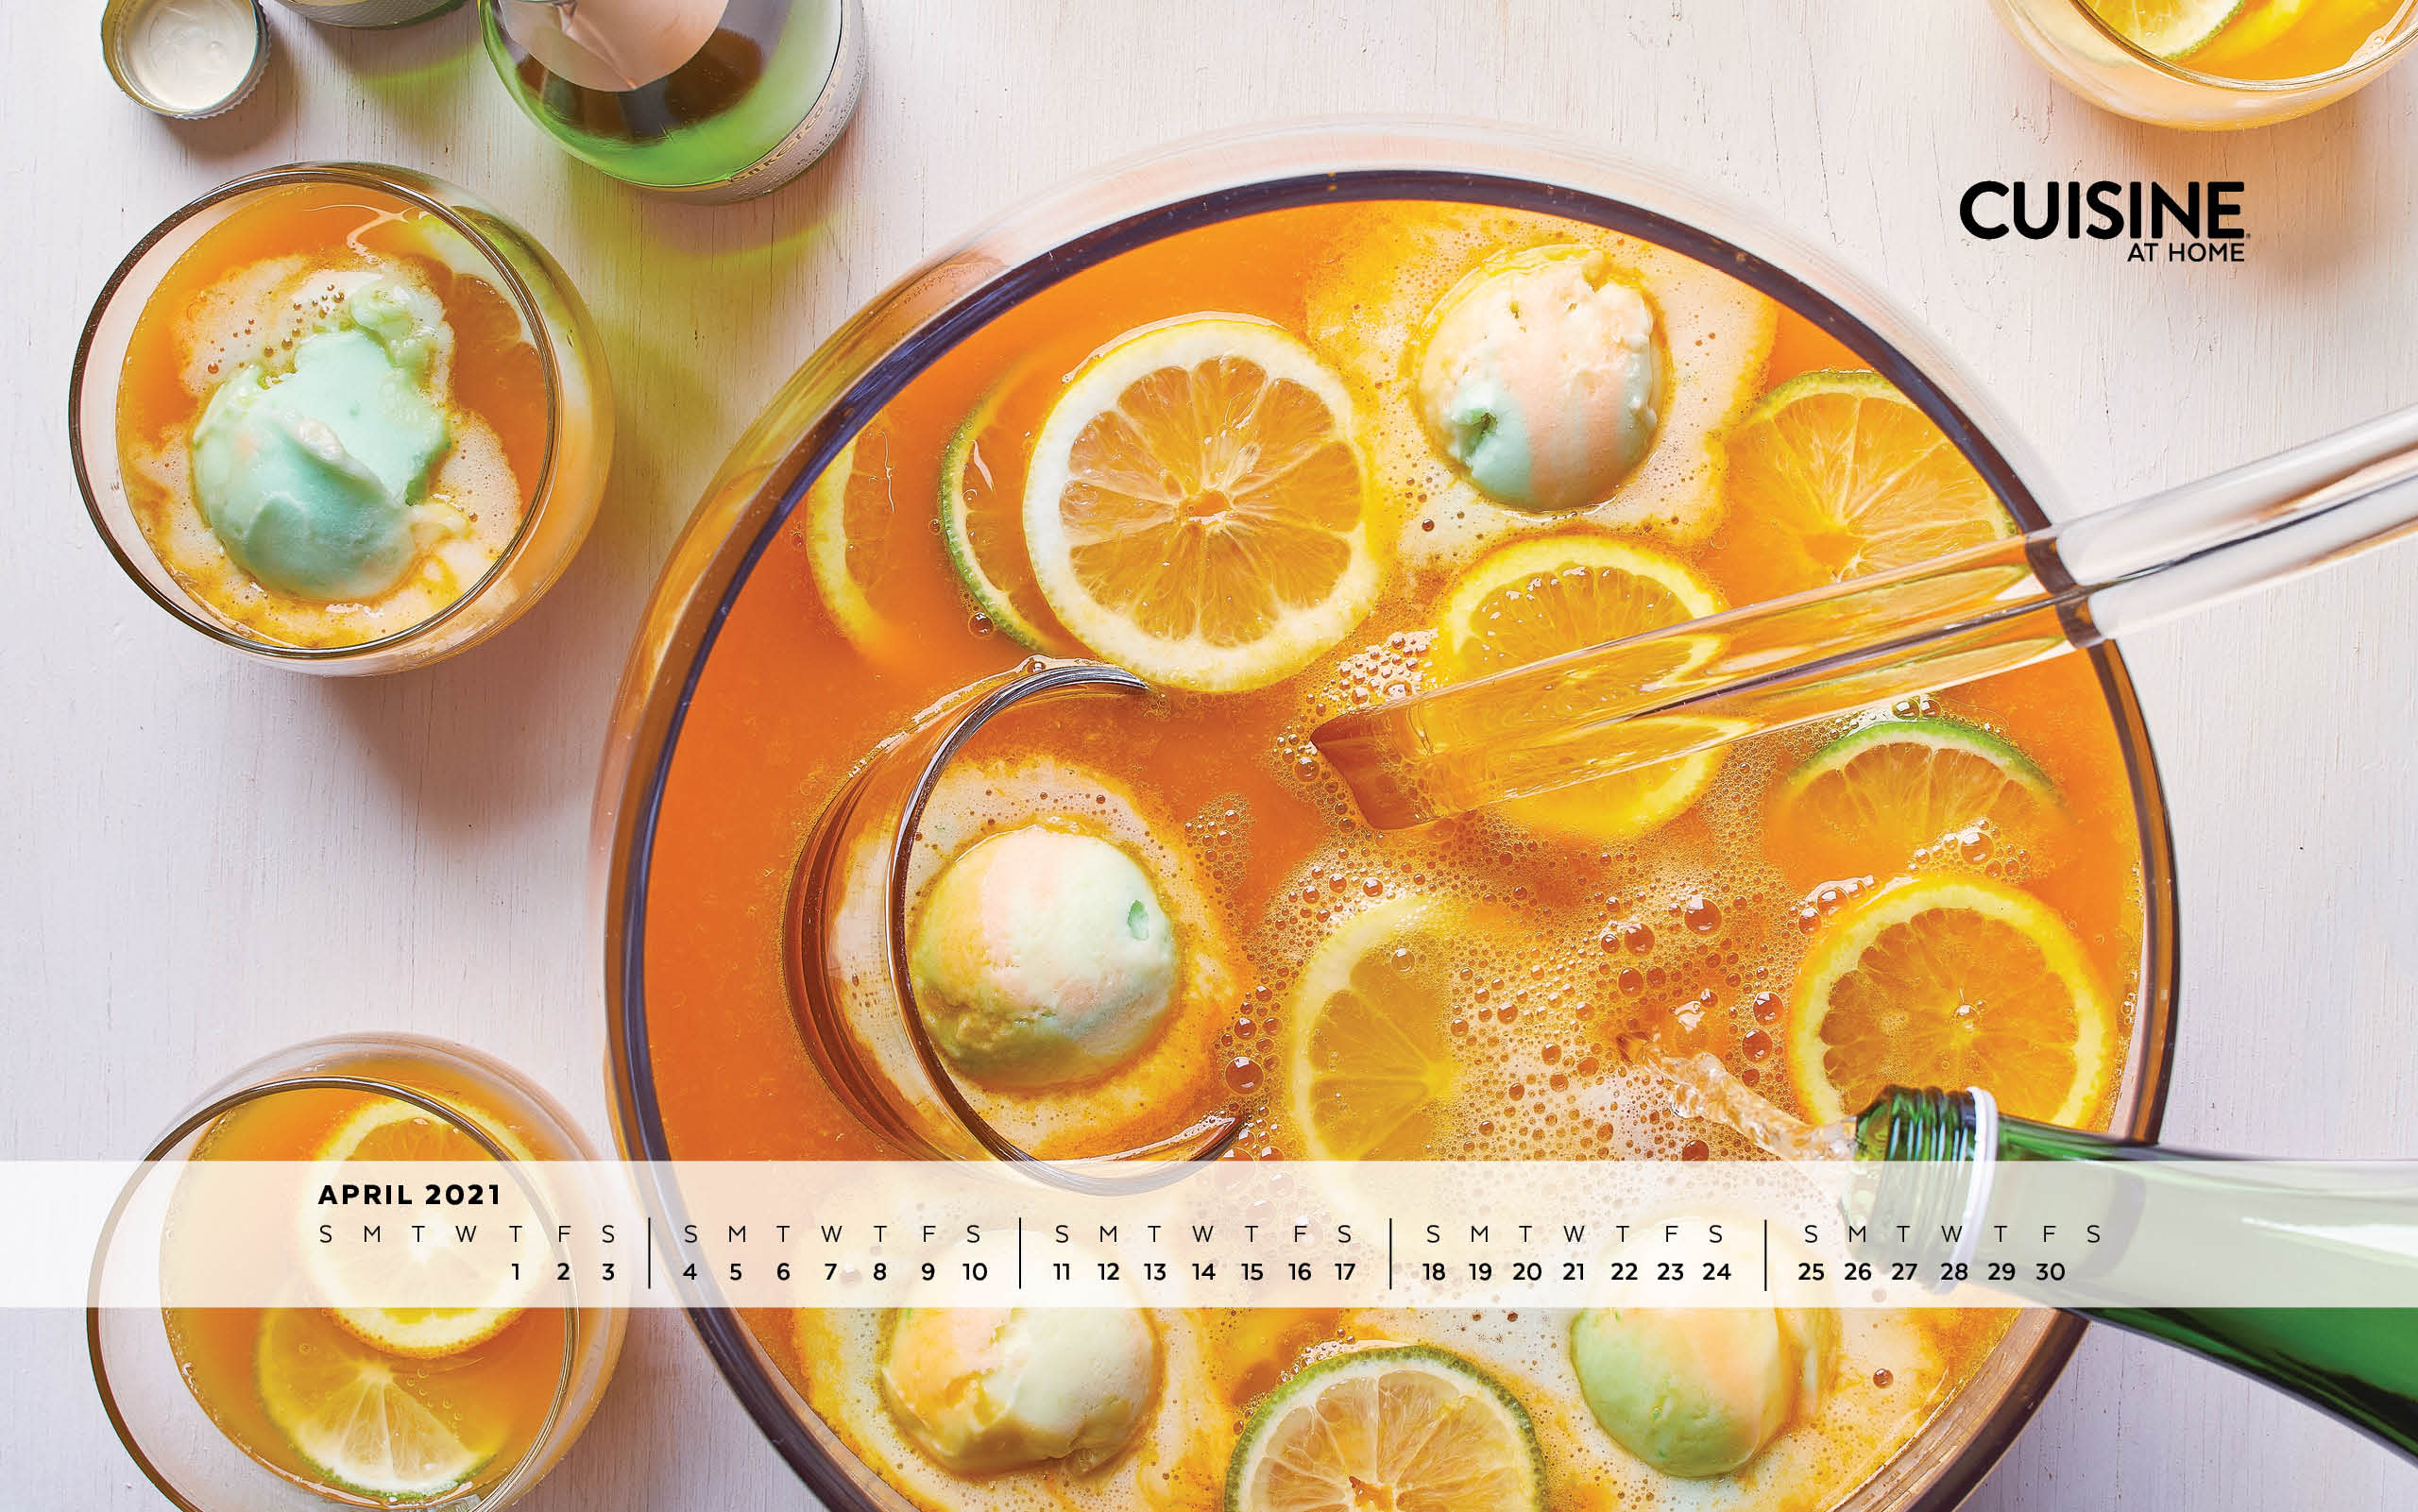 Free Desktop Wallpaper with Calendar - April 2021 - Fizzy Bunny sherbet orange punch bowl